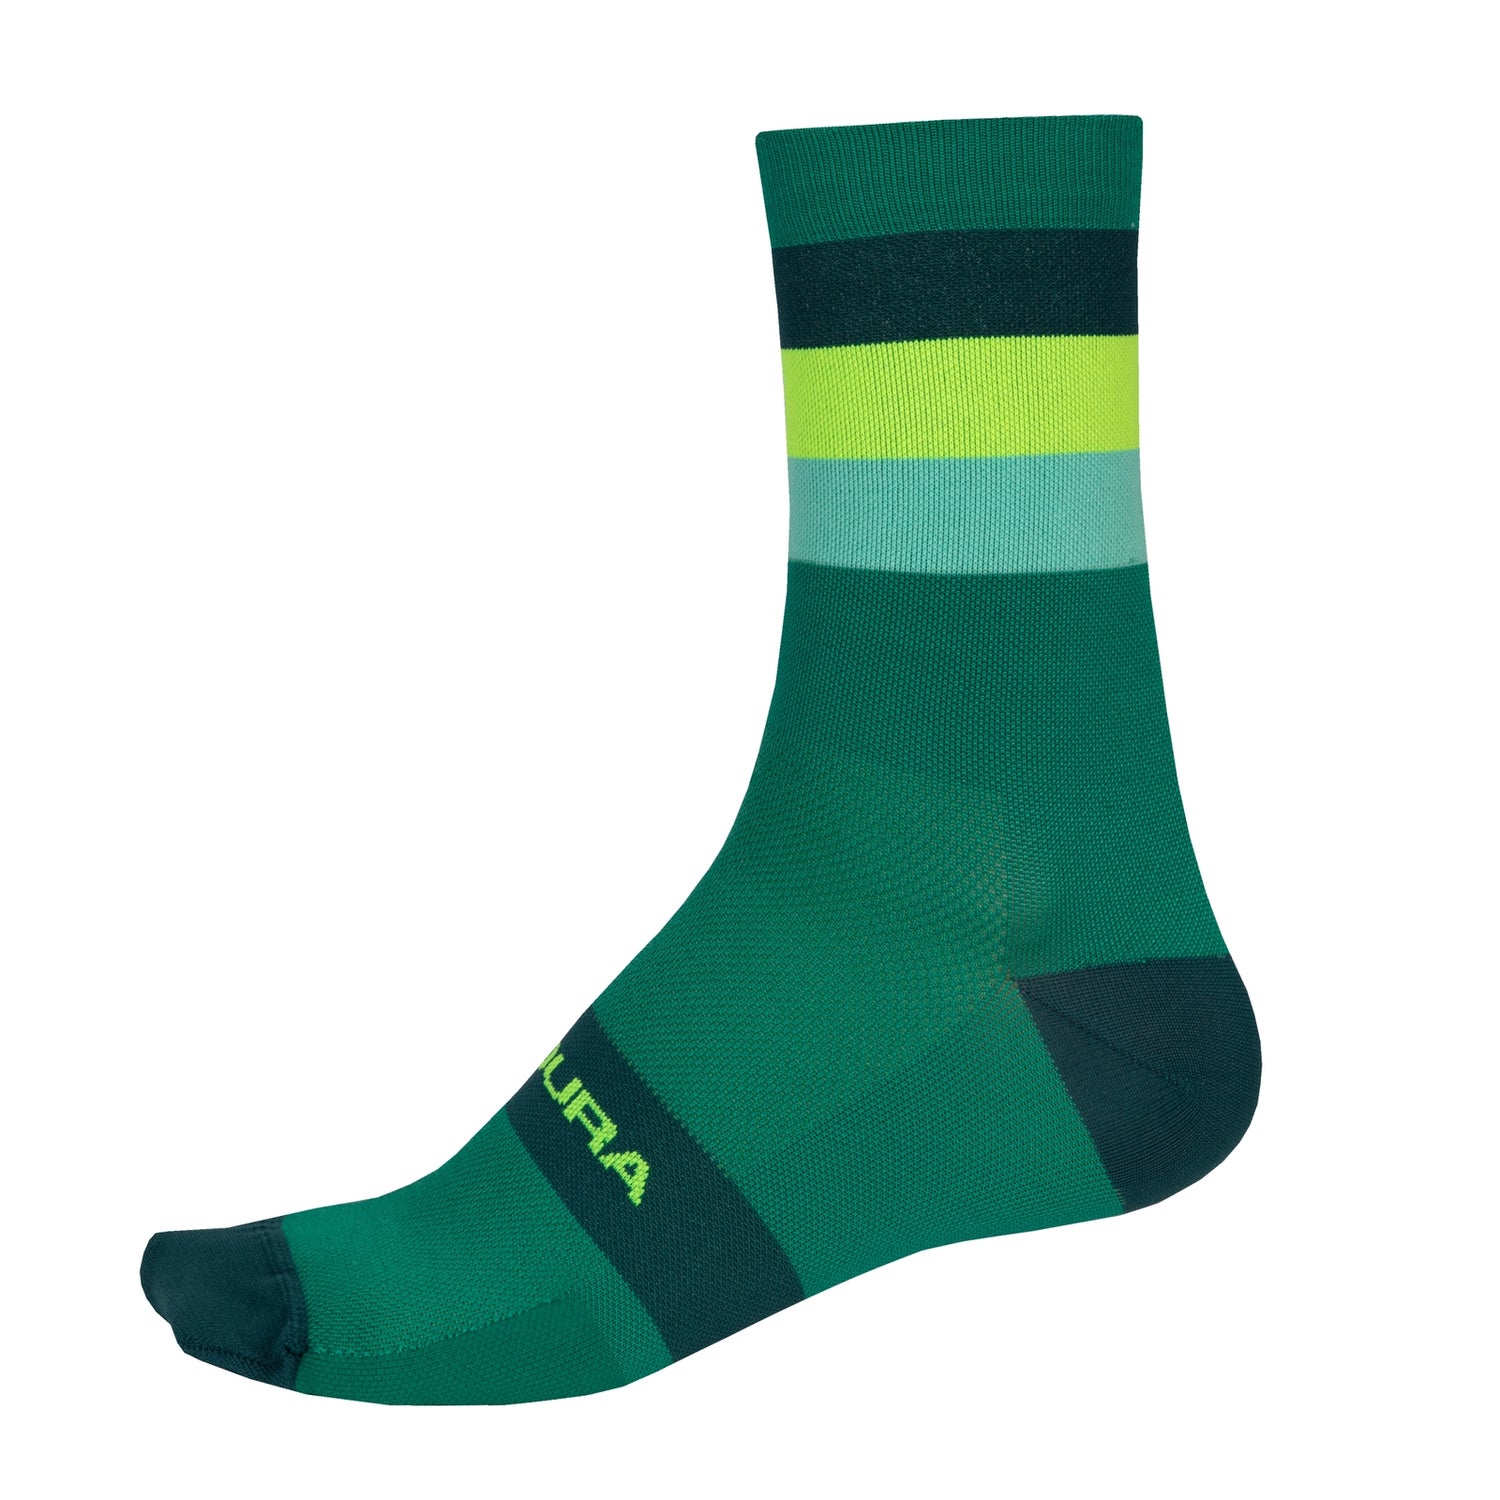 Bandwidth Sock - Emerald Green